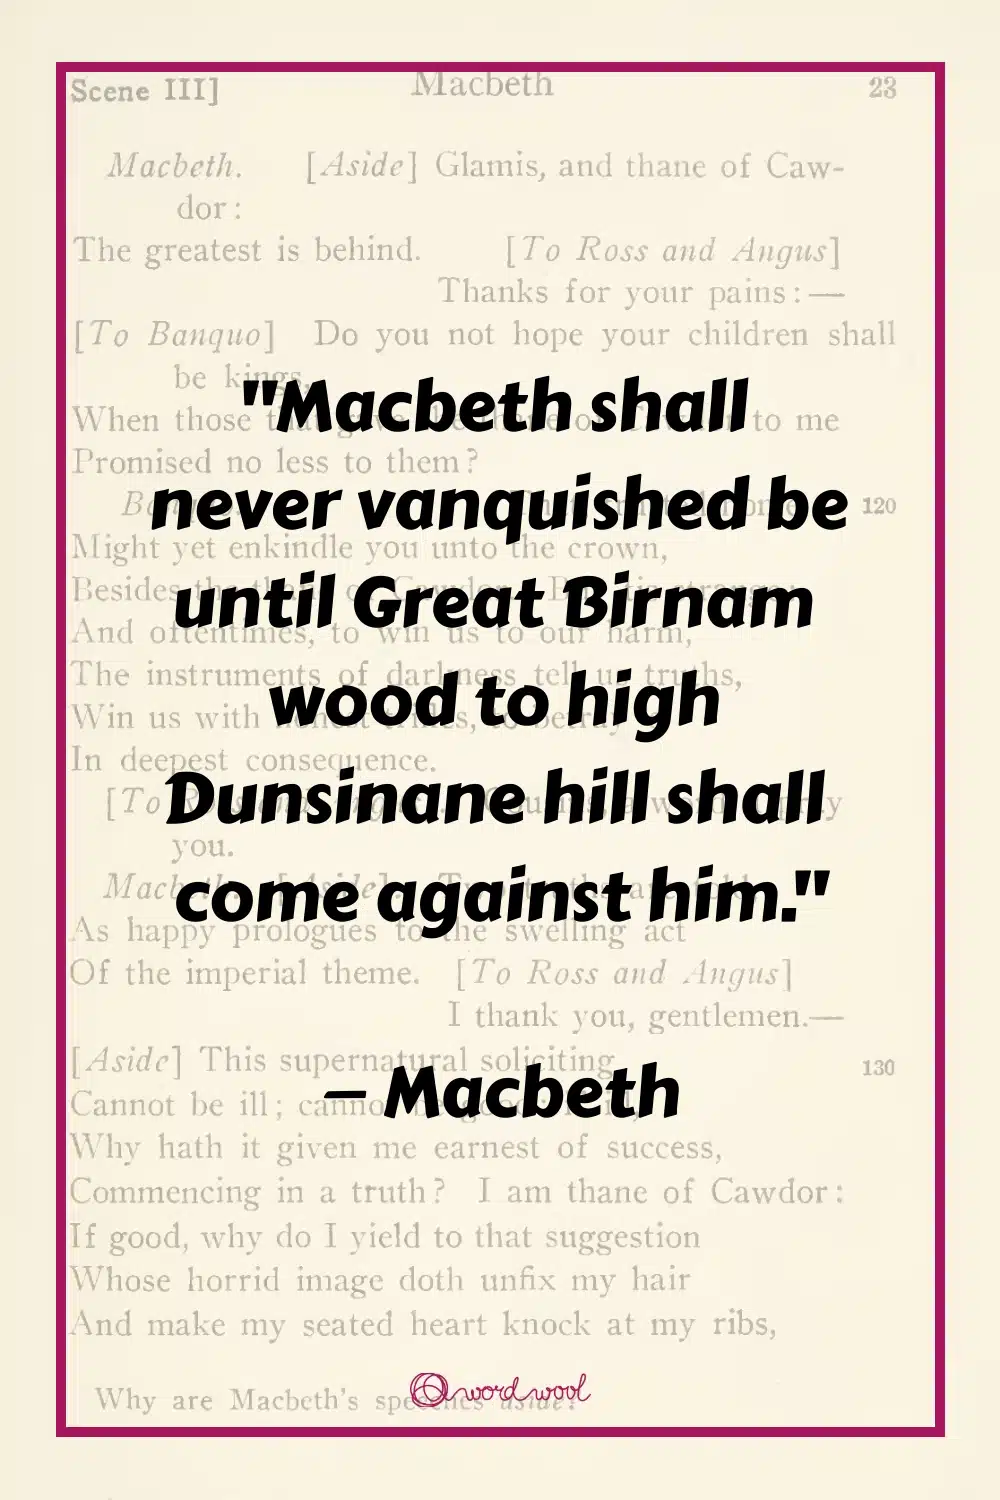 Macbeth Shall 1